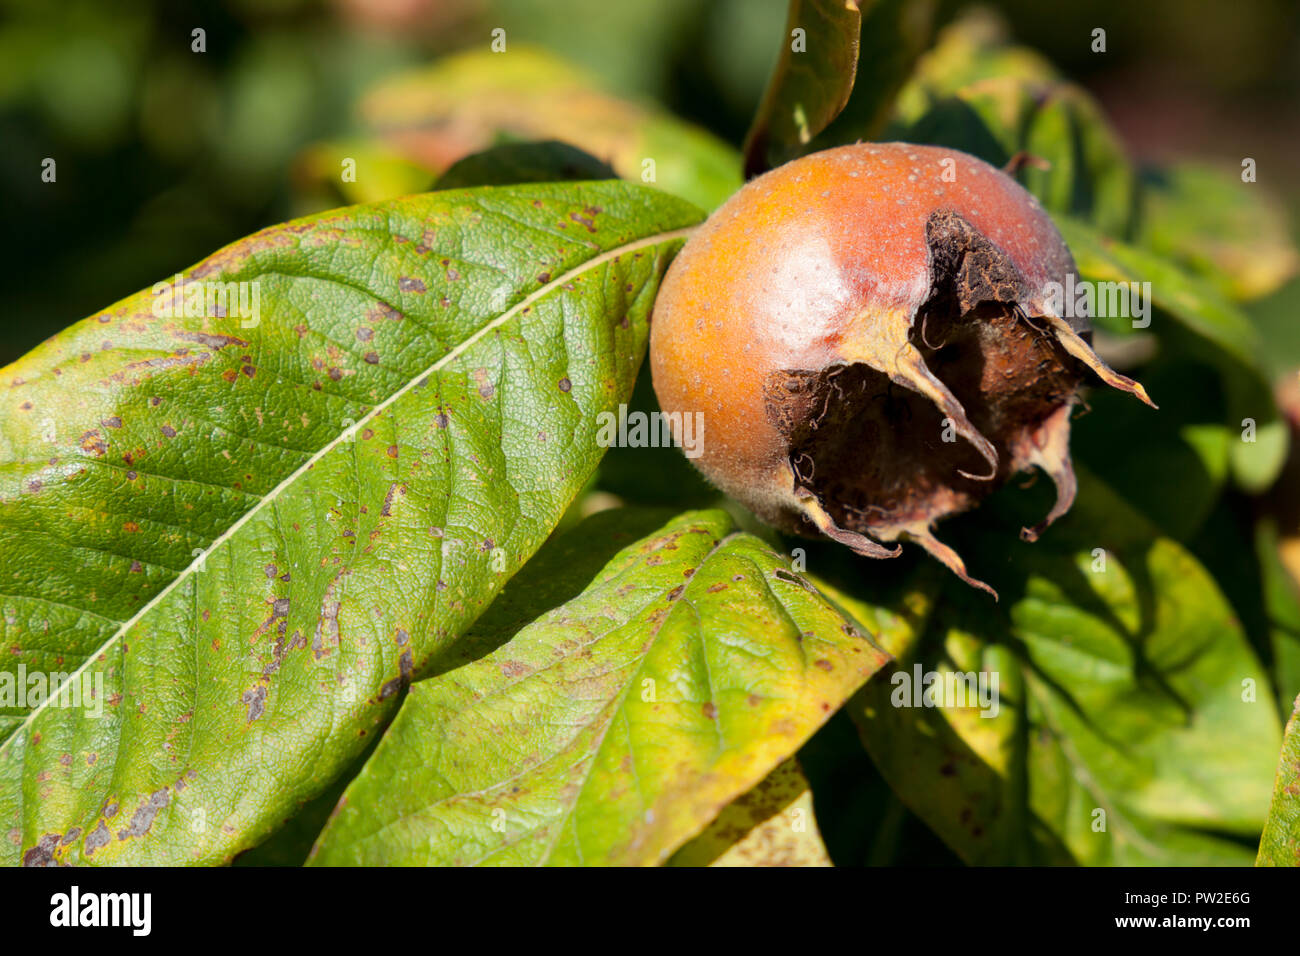 Common medlar fruit of the medlar tree Stock Photo